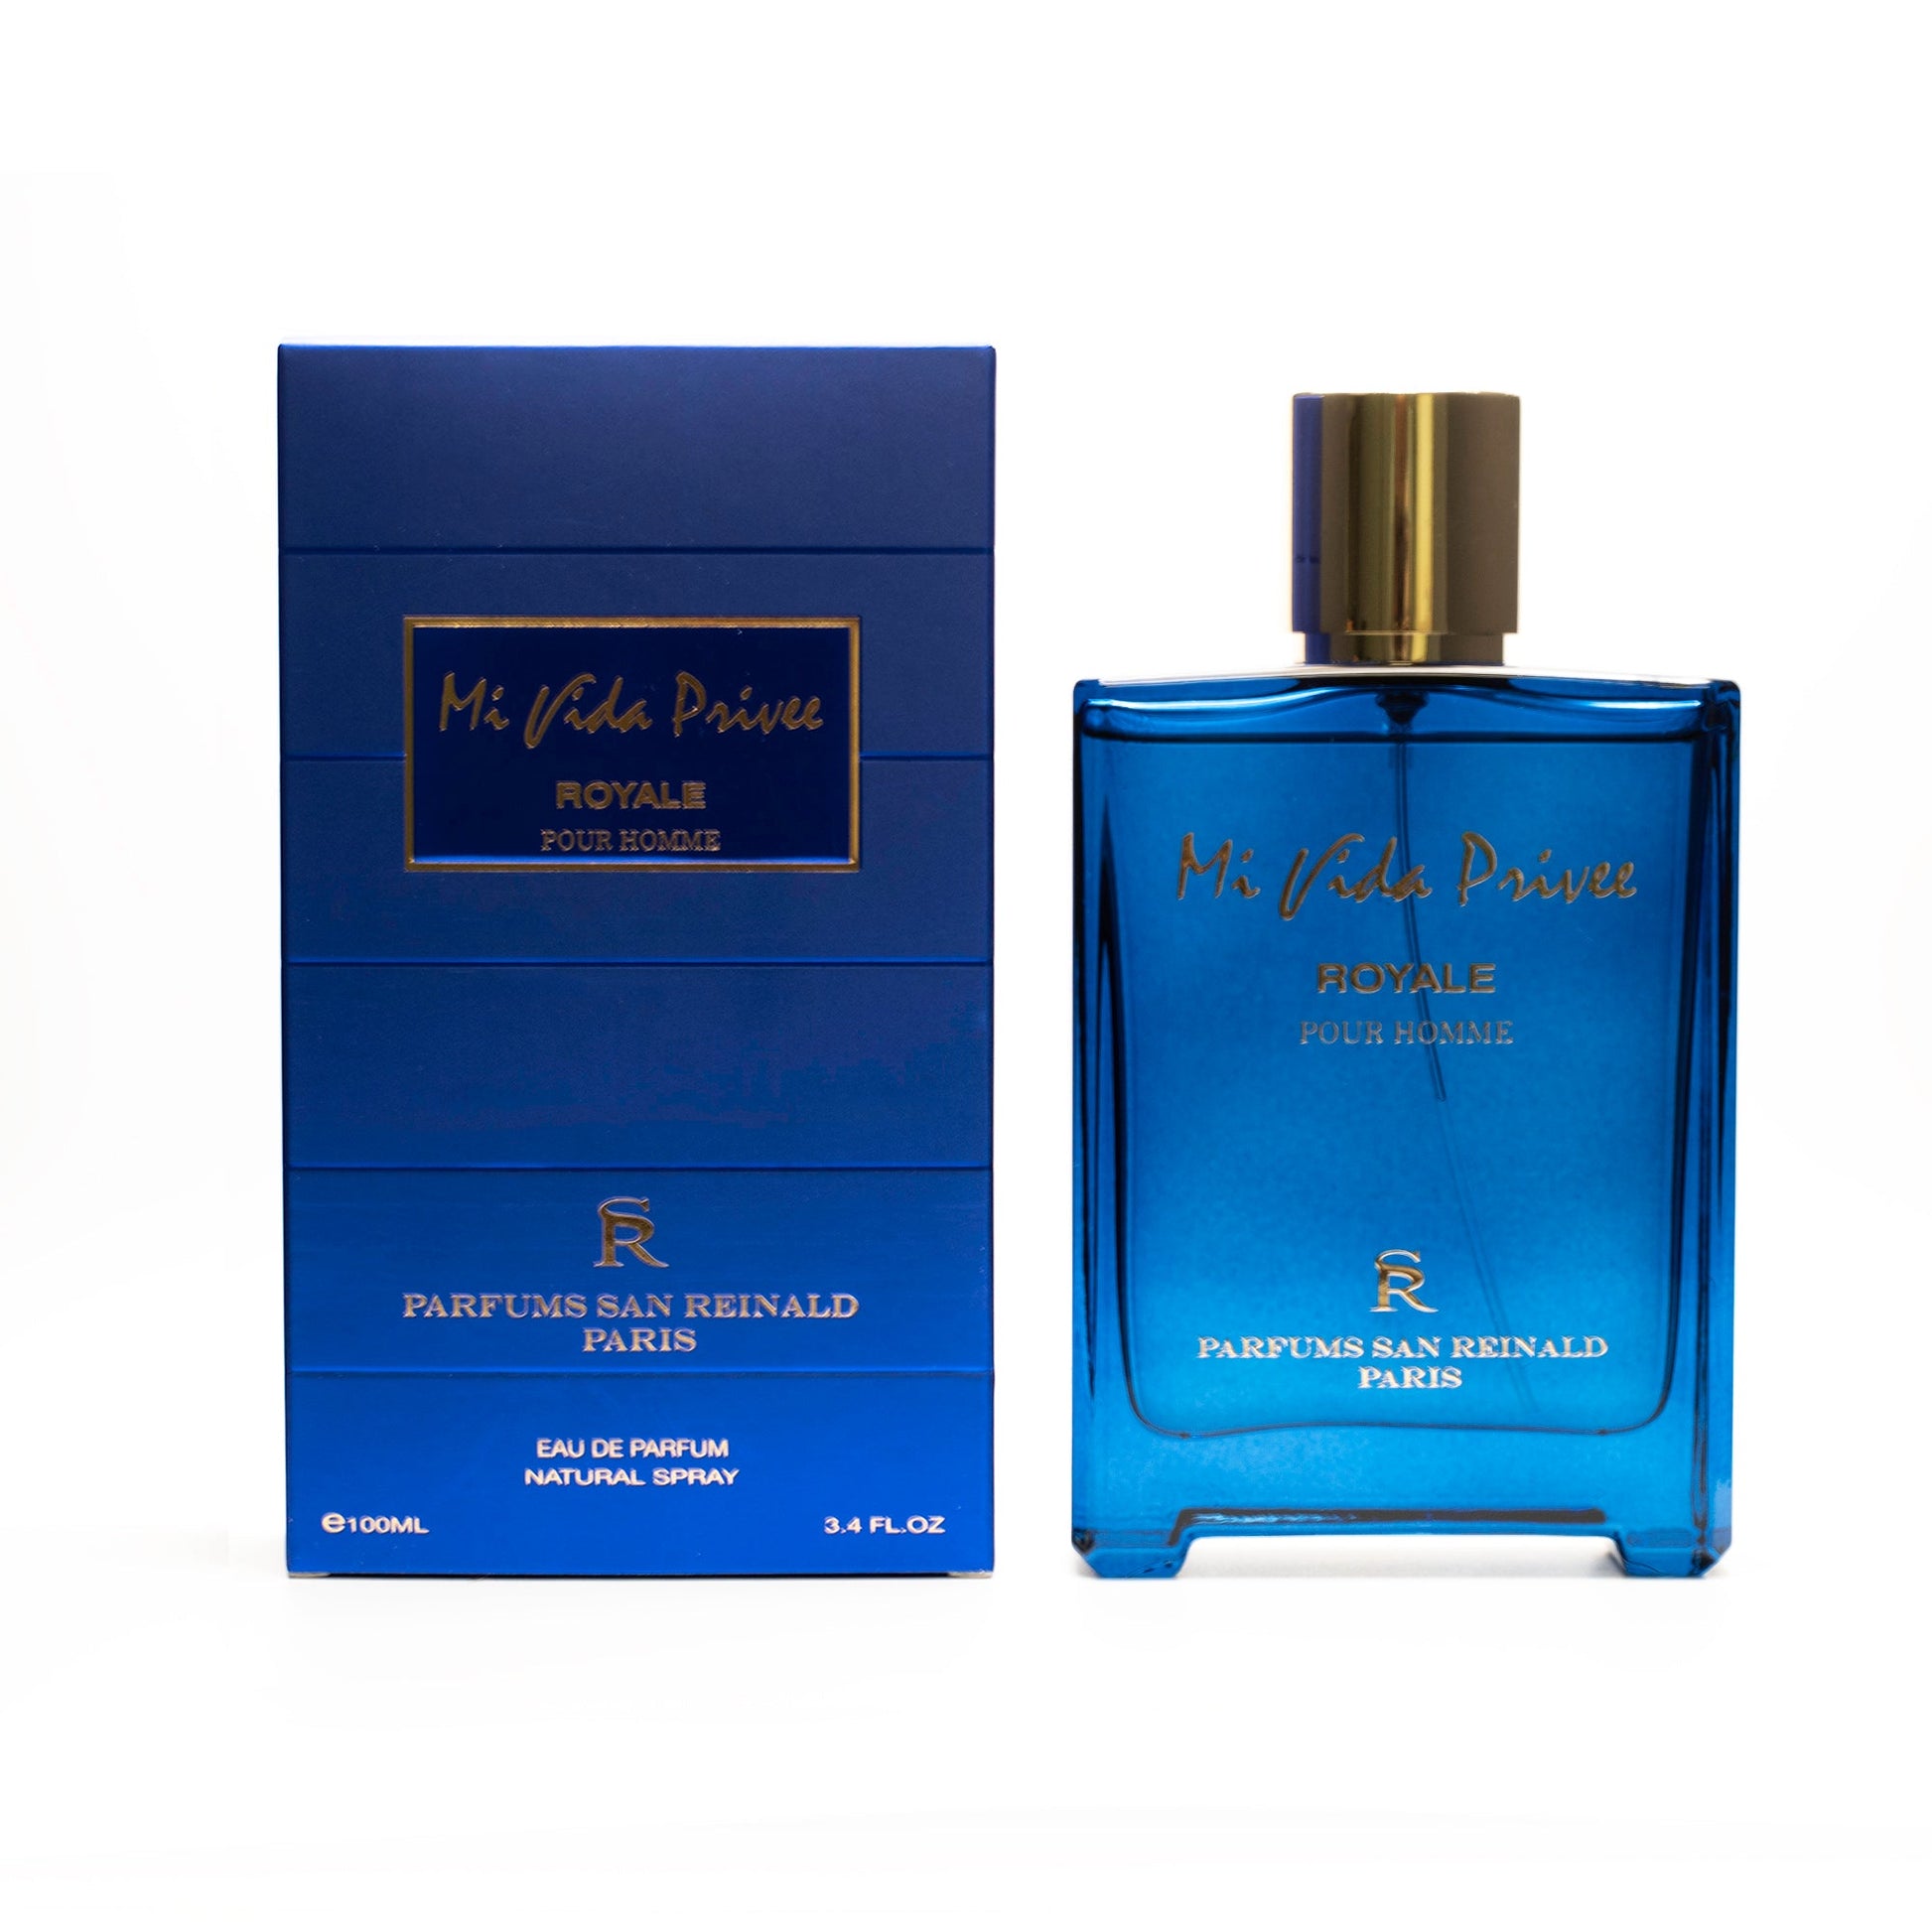 Mi Vida Privee Royale Eau de Parfum Spray for Men, Product image 1